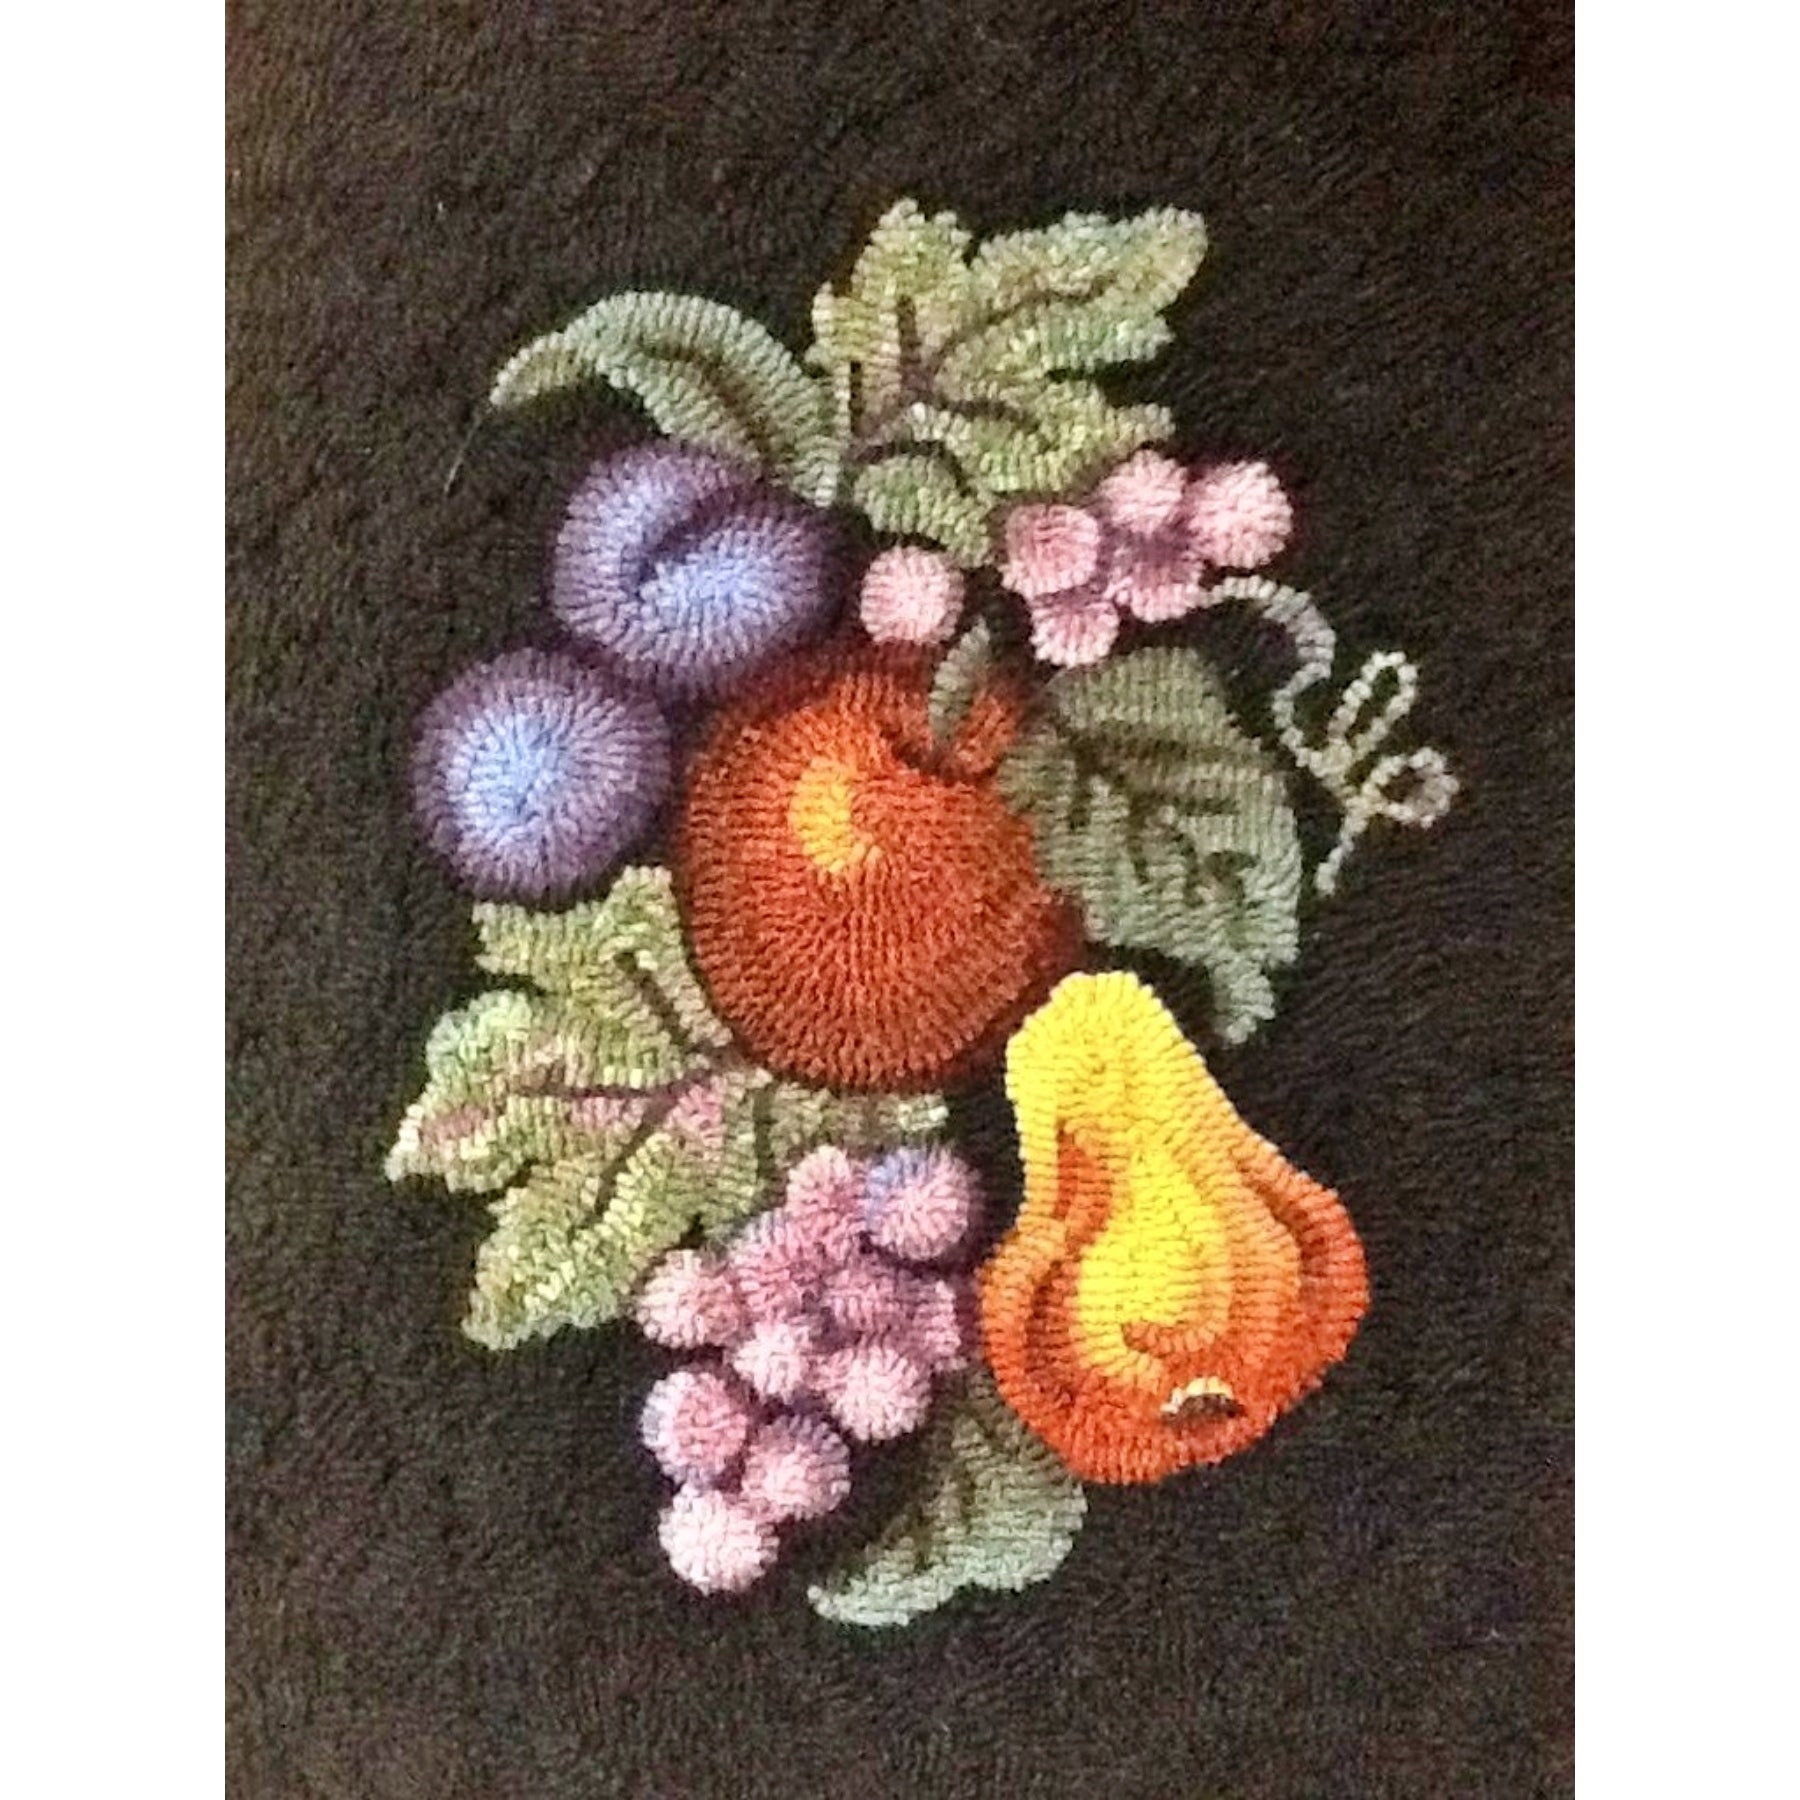 Fruit, rug hooked by Linda Powell